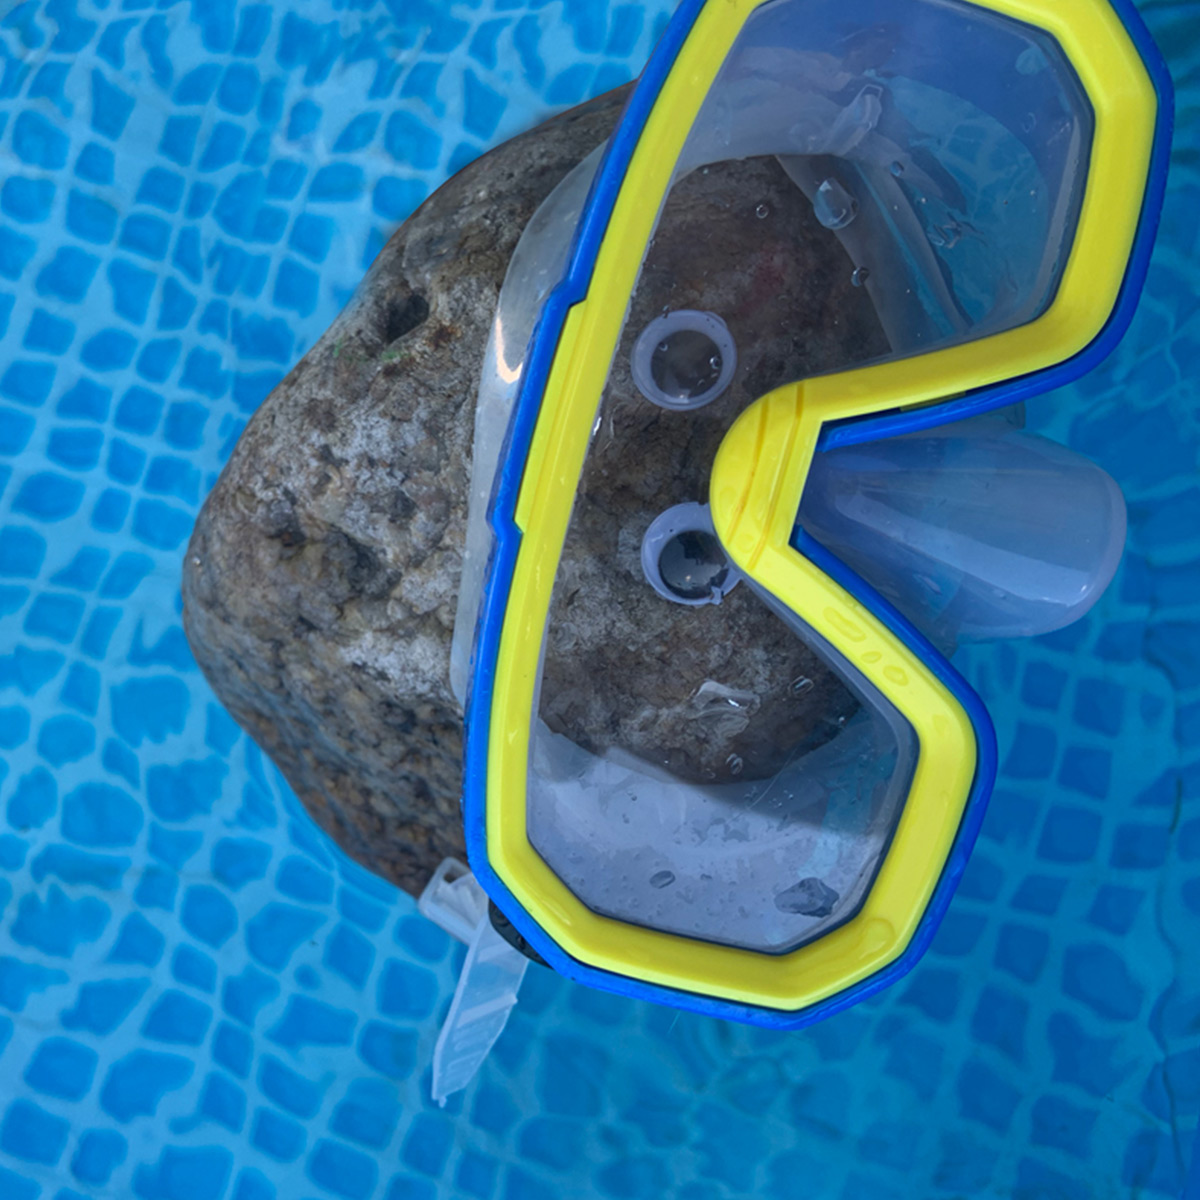 Skip the Pet Rock with swim goggles